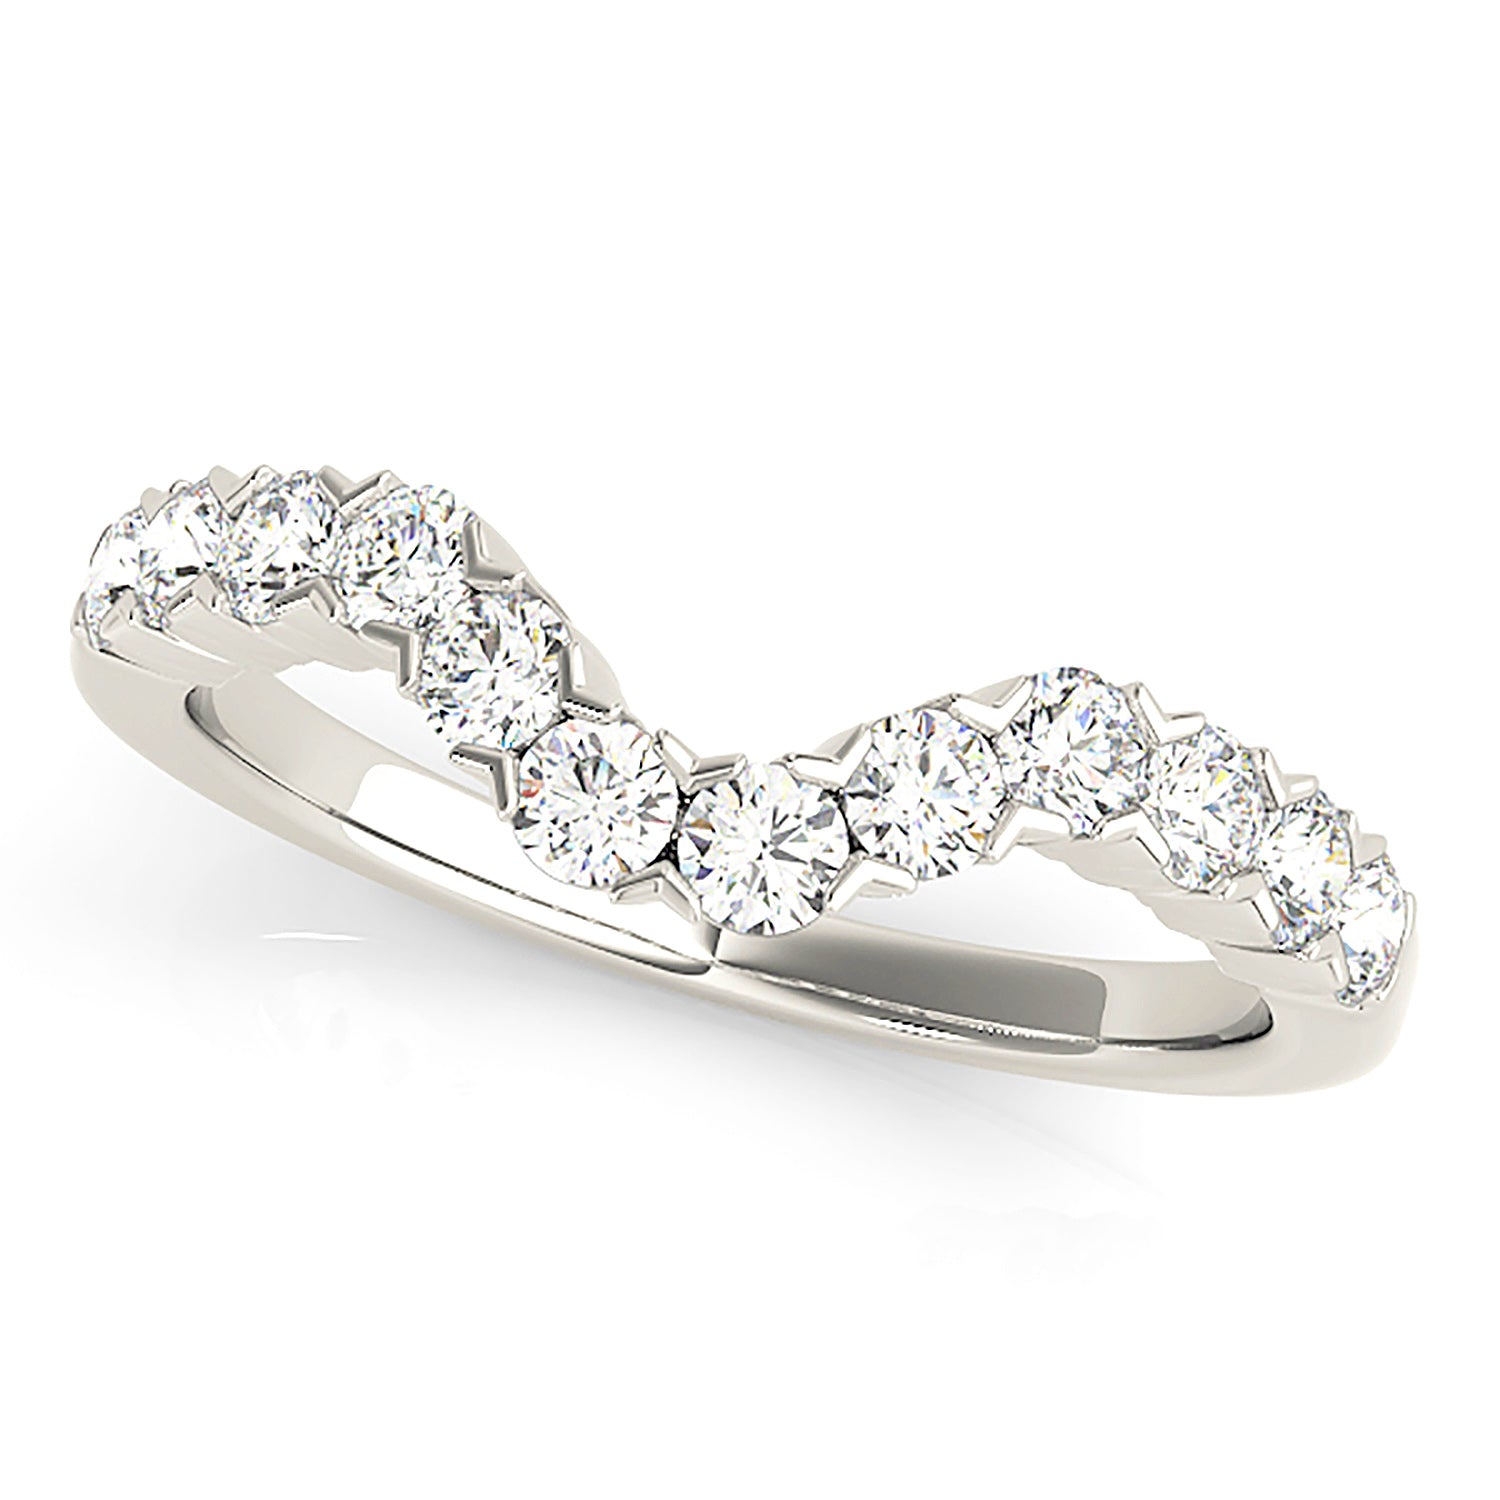 Diamond Wedding Band - 14K/18k Solid White Gold / Platinum | Curved Band | Prong Set Diamond Anniversary Ring | Modern Design-in 14K/18K White, Yellow, Rose Gold and Platinum - Christmas Jewelry Gift -VIRABYANI